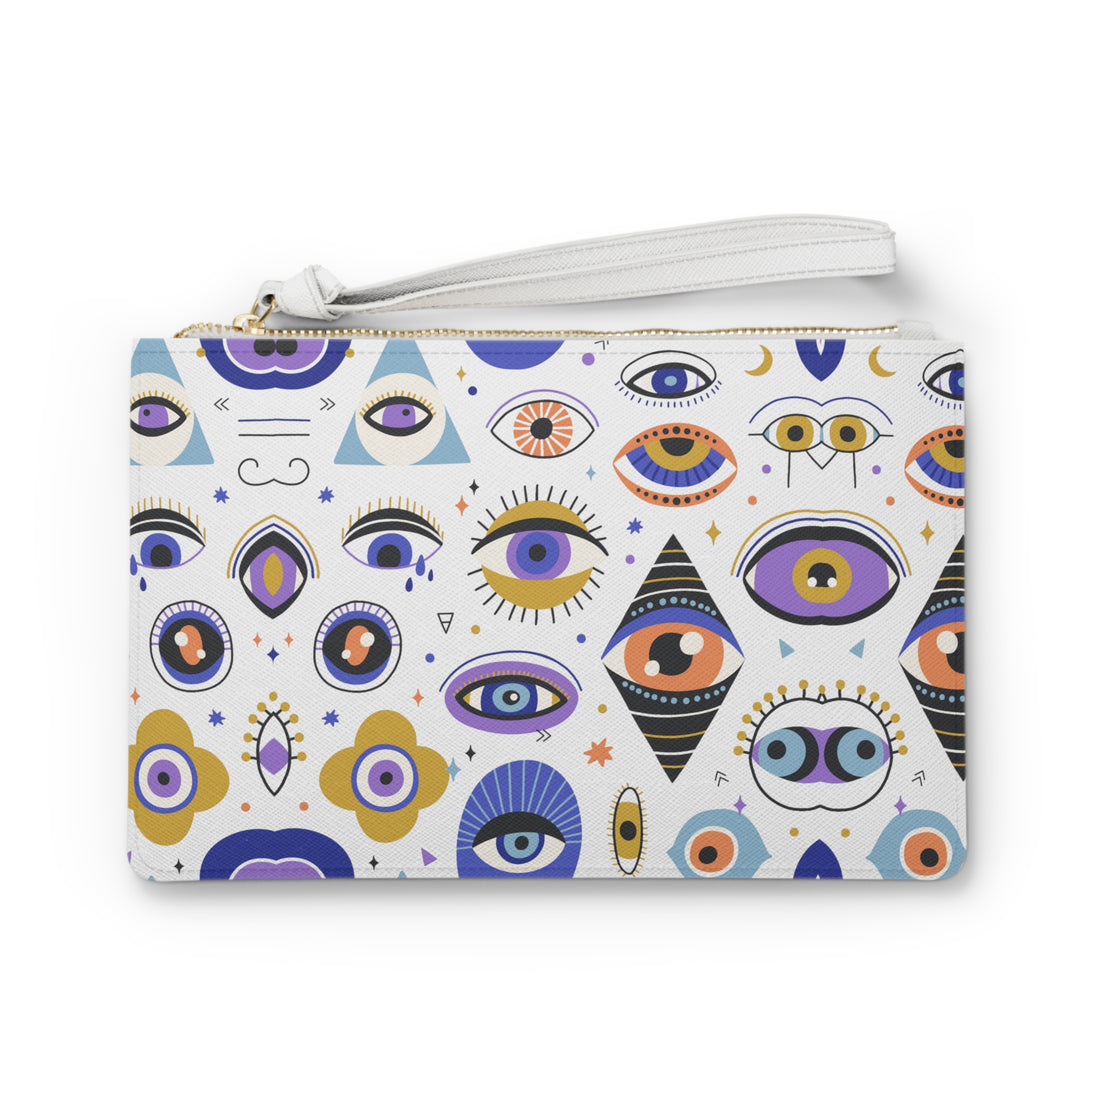 abstract evil eye print clutch bag